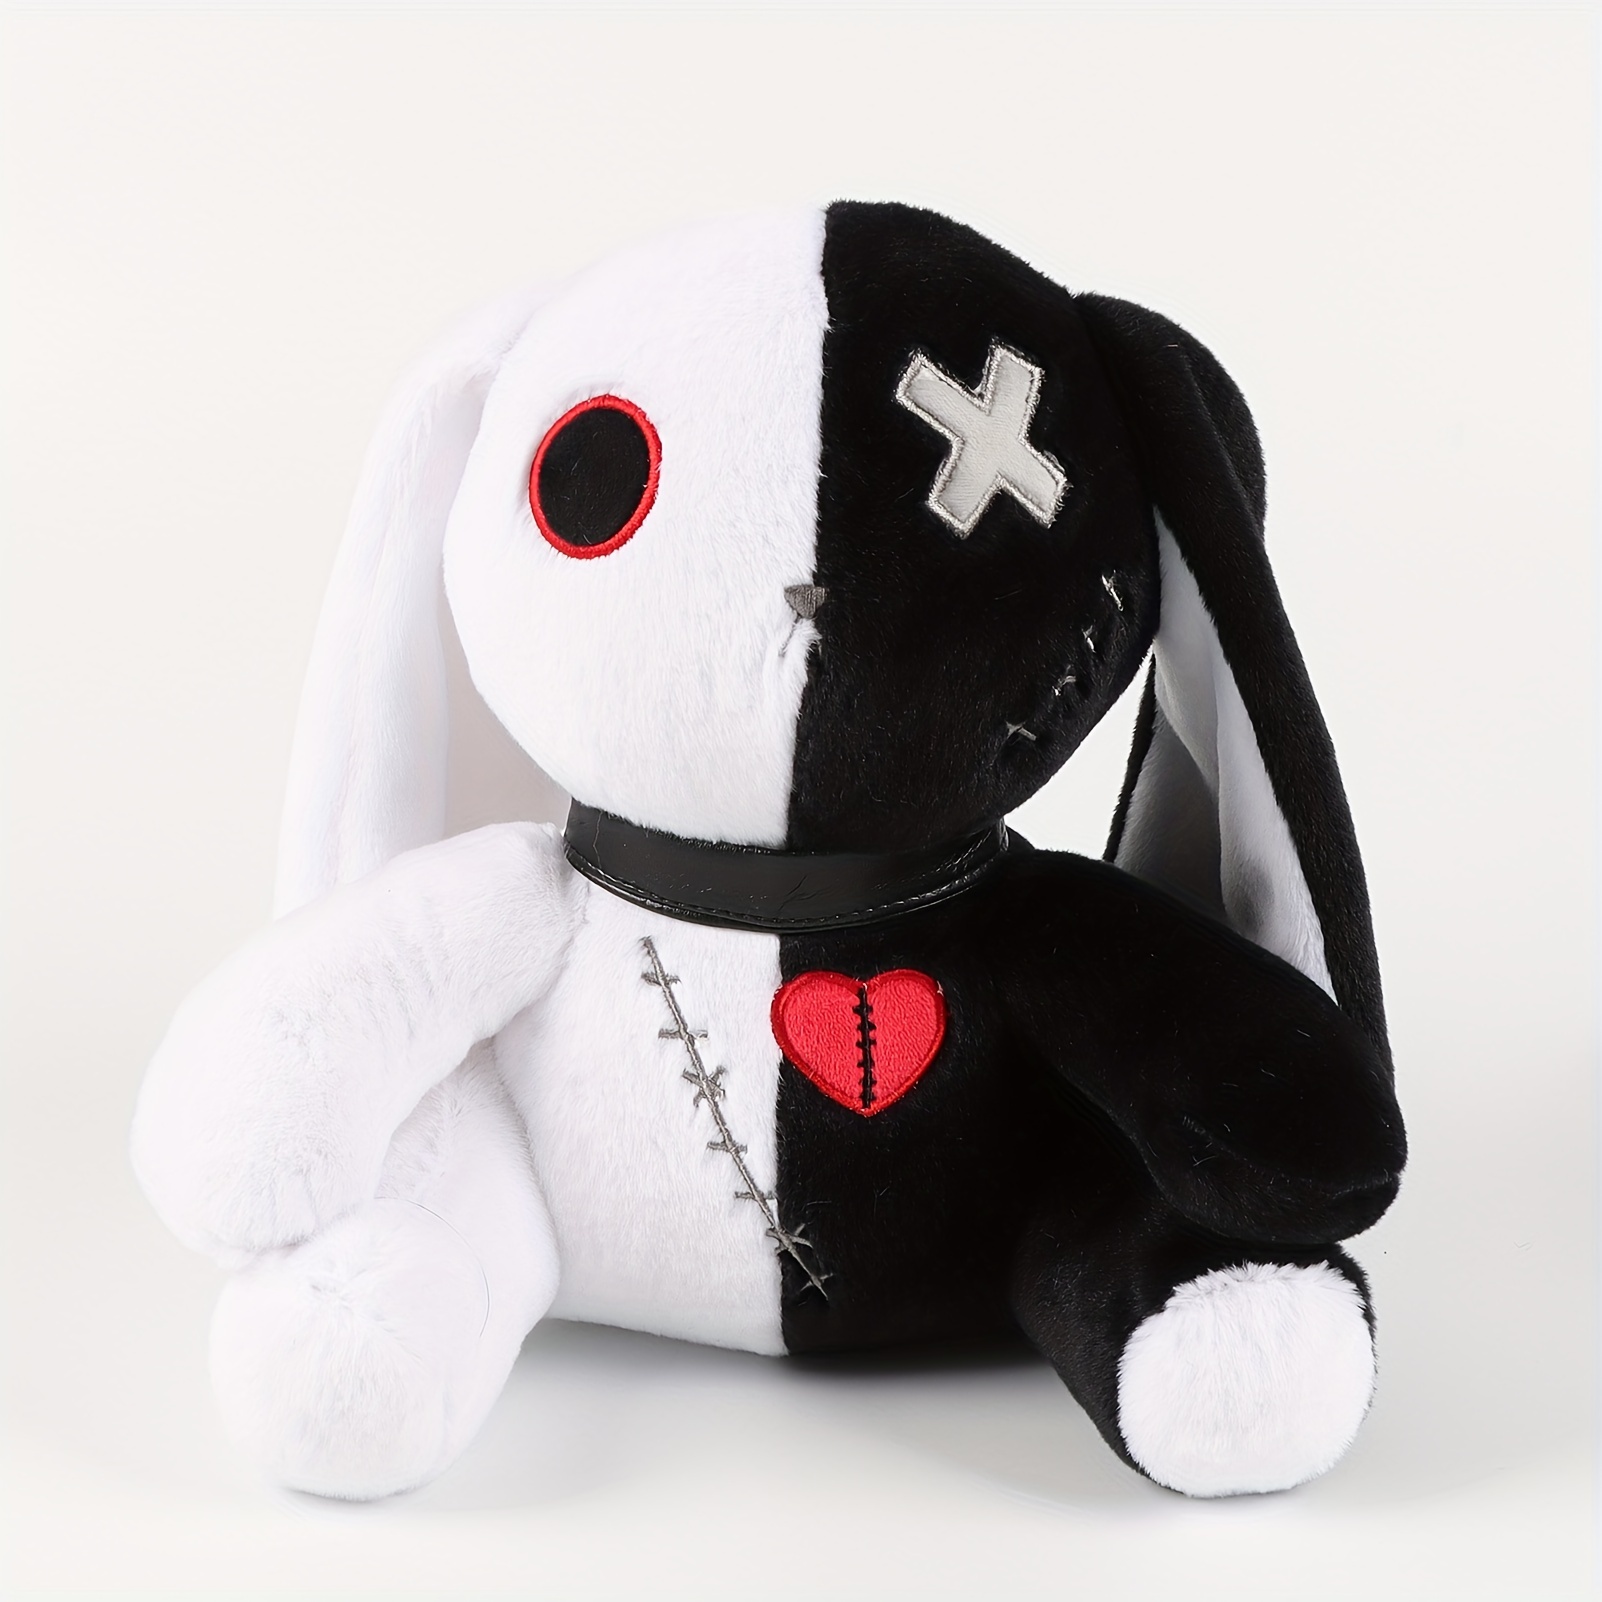 Creepy Goth Bunny Plush Crazy Rabbit Plushie Toys, Spooky Gothic